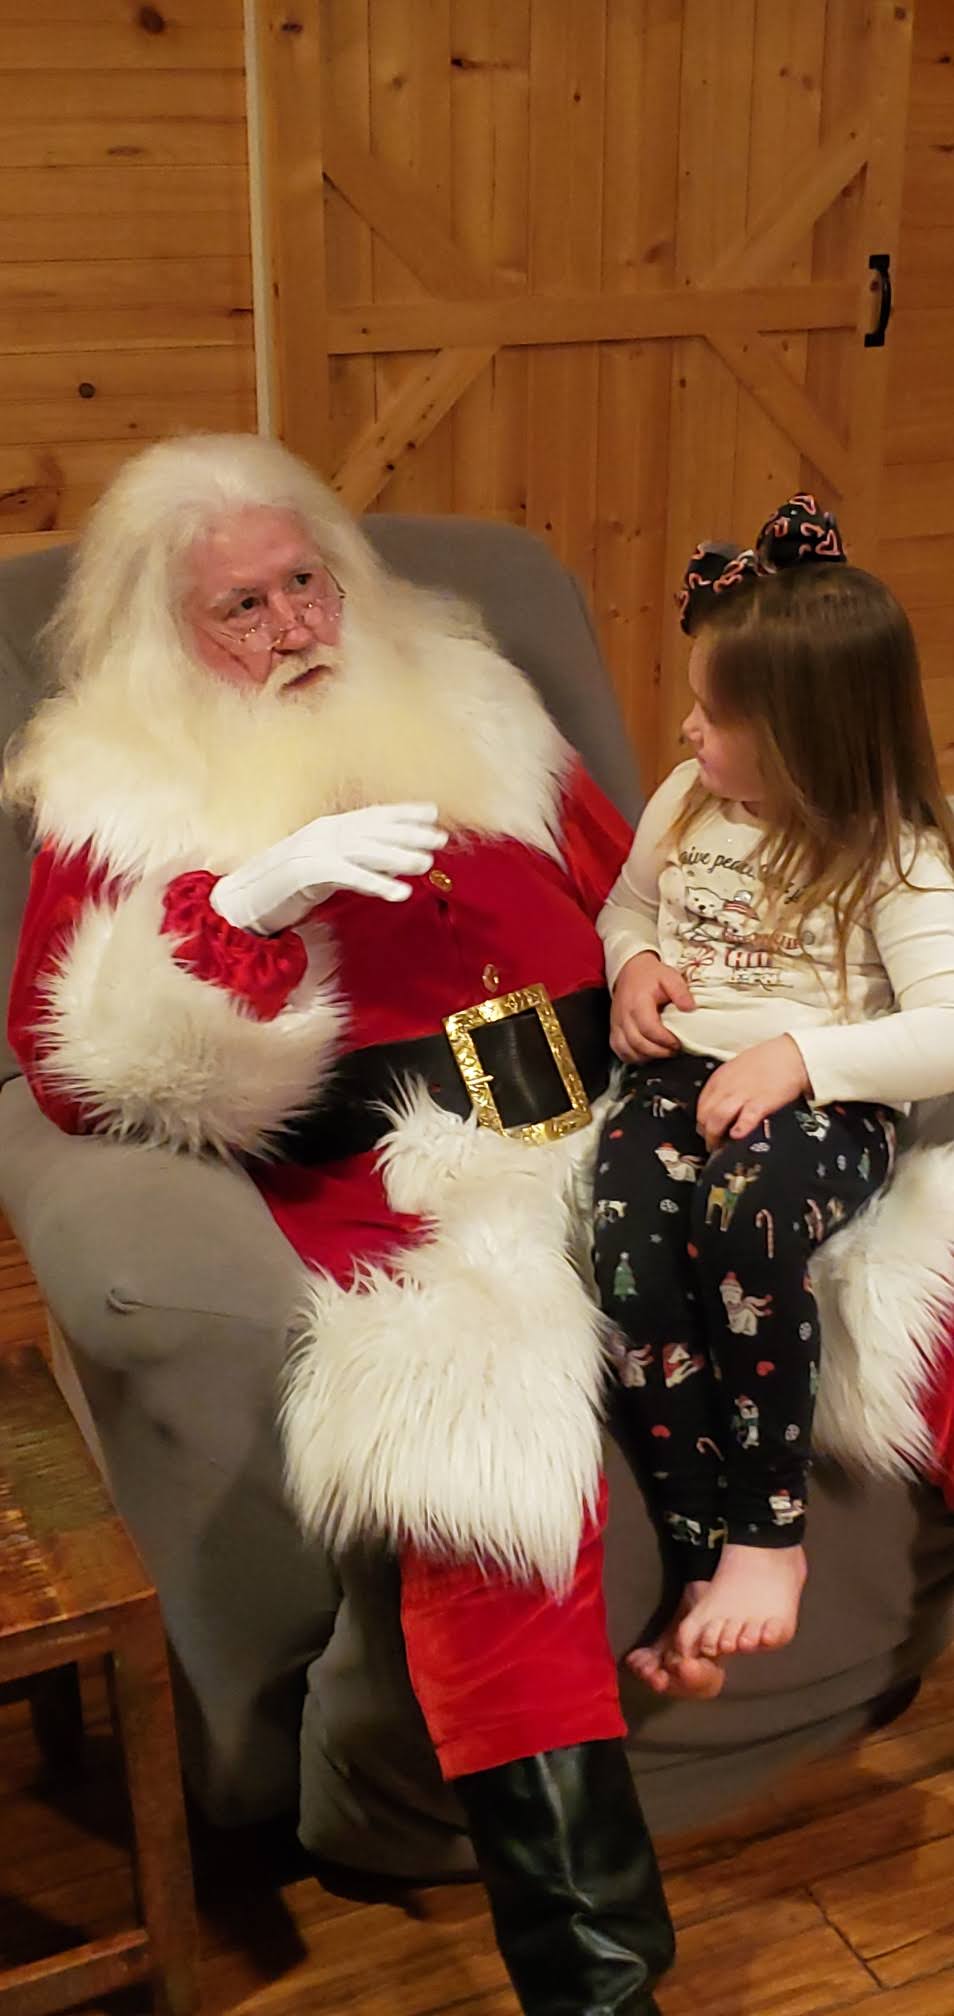 Getting a little Santa advice